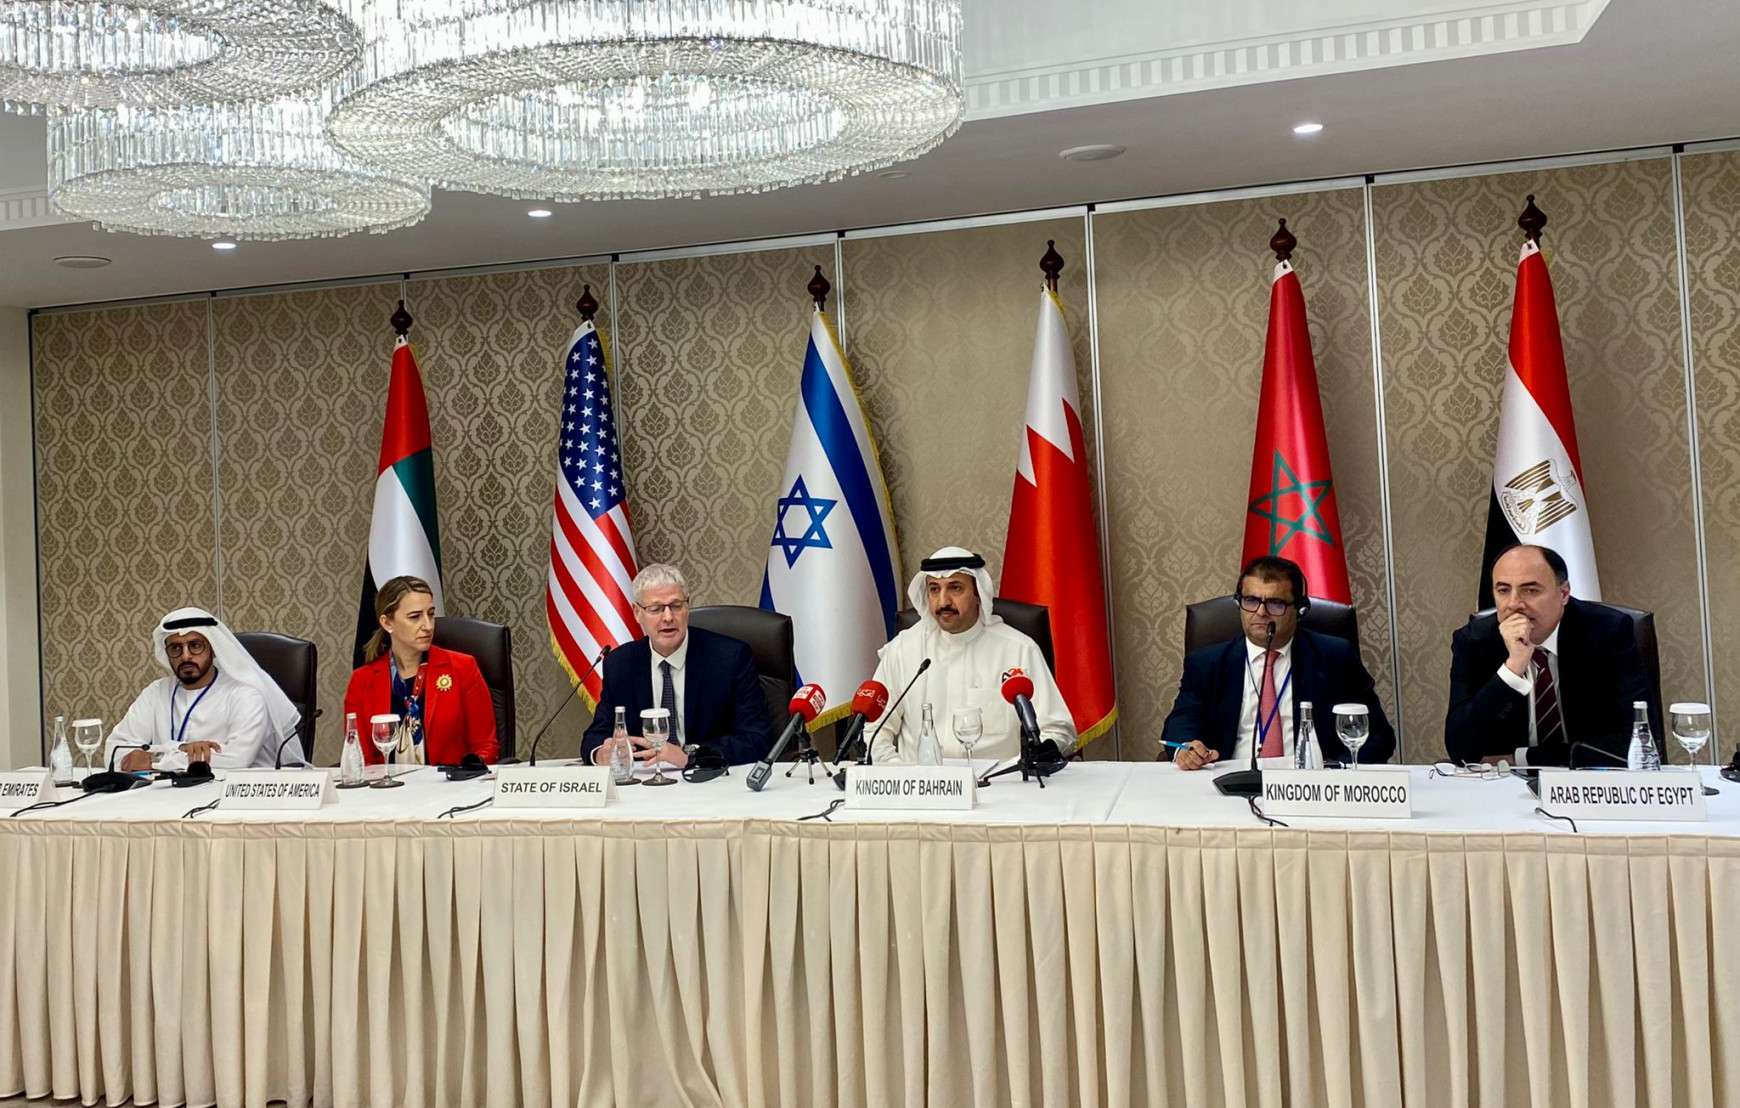 Negev Forum strengthens Israel’s ties with Arab countries